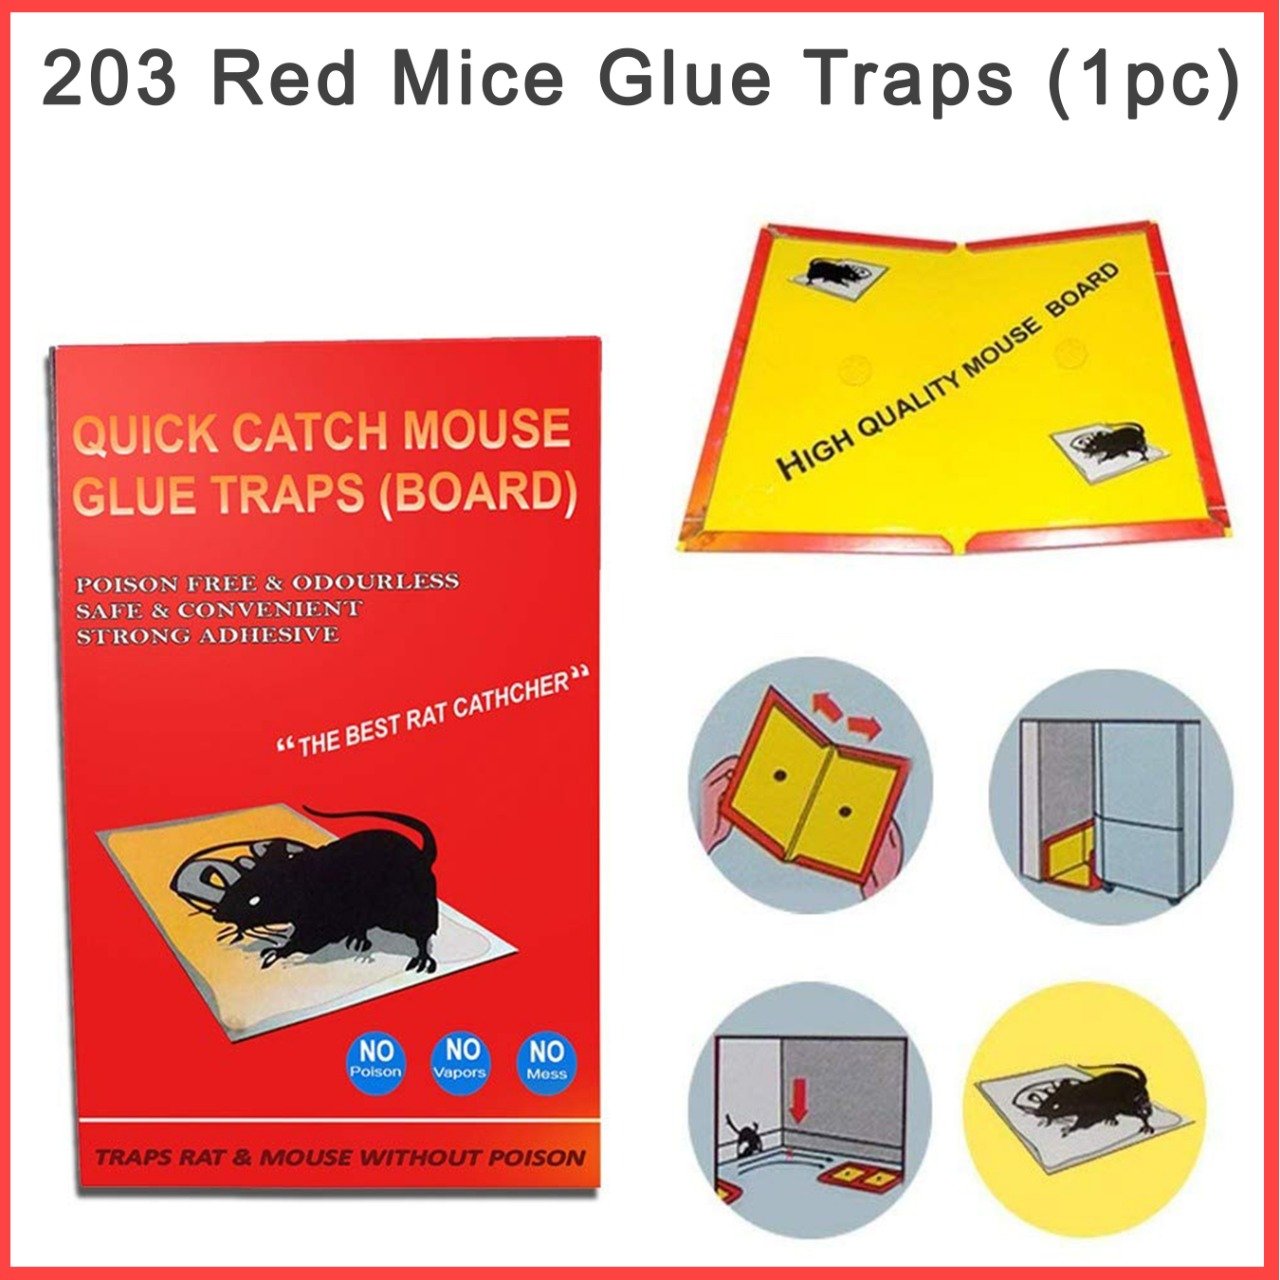 0203 Red Mice Glue Traps (1pc) - SkyShopy